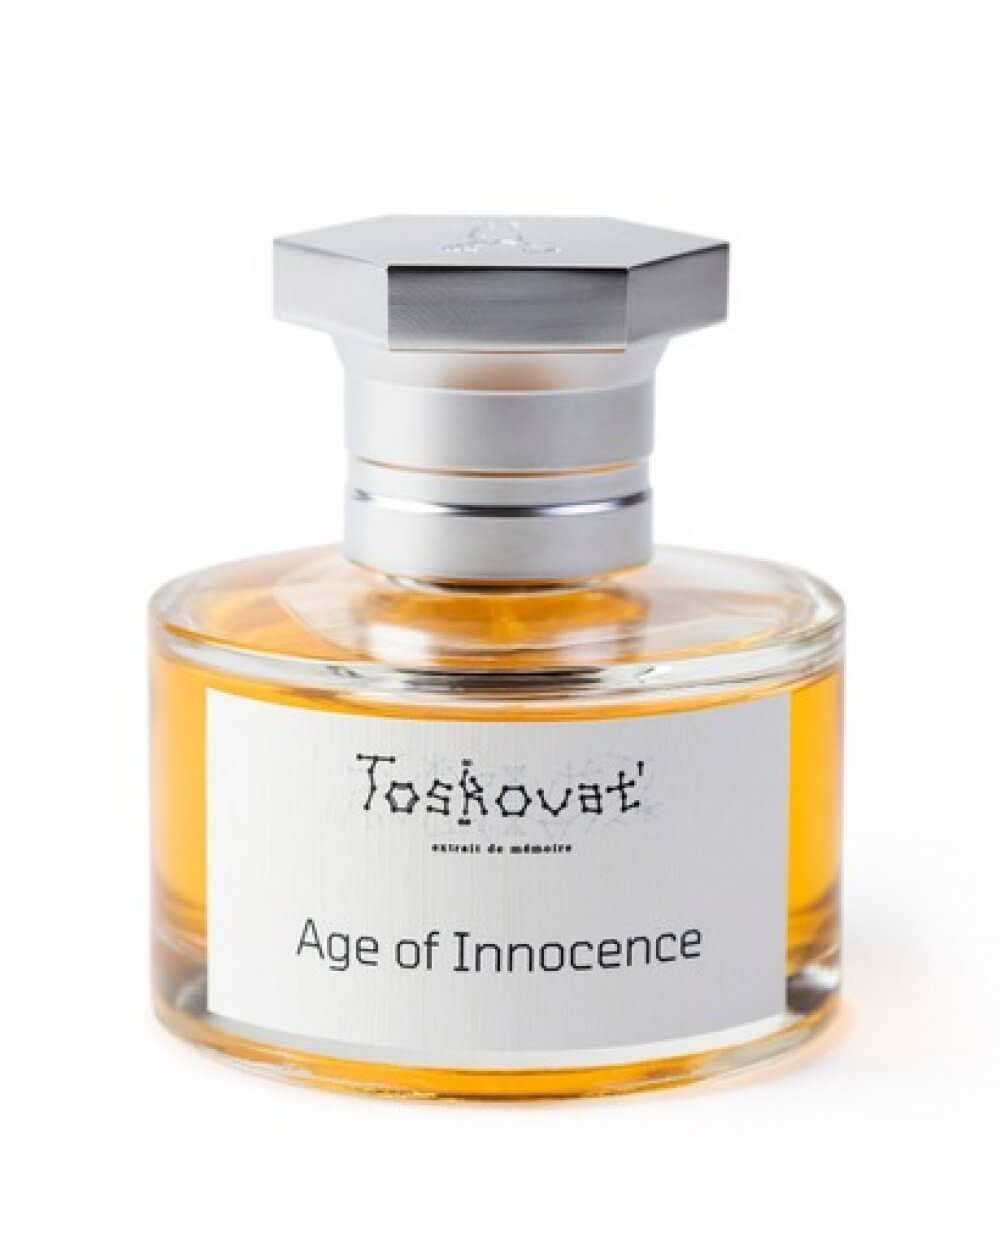 the age of innocence (1993) online subtitrat Toskovat Age of Innocence 60 ML Extract de Parfum